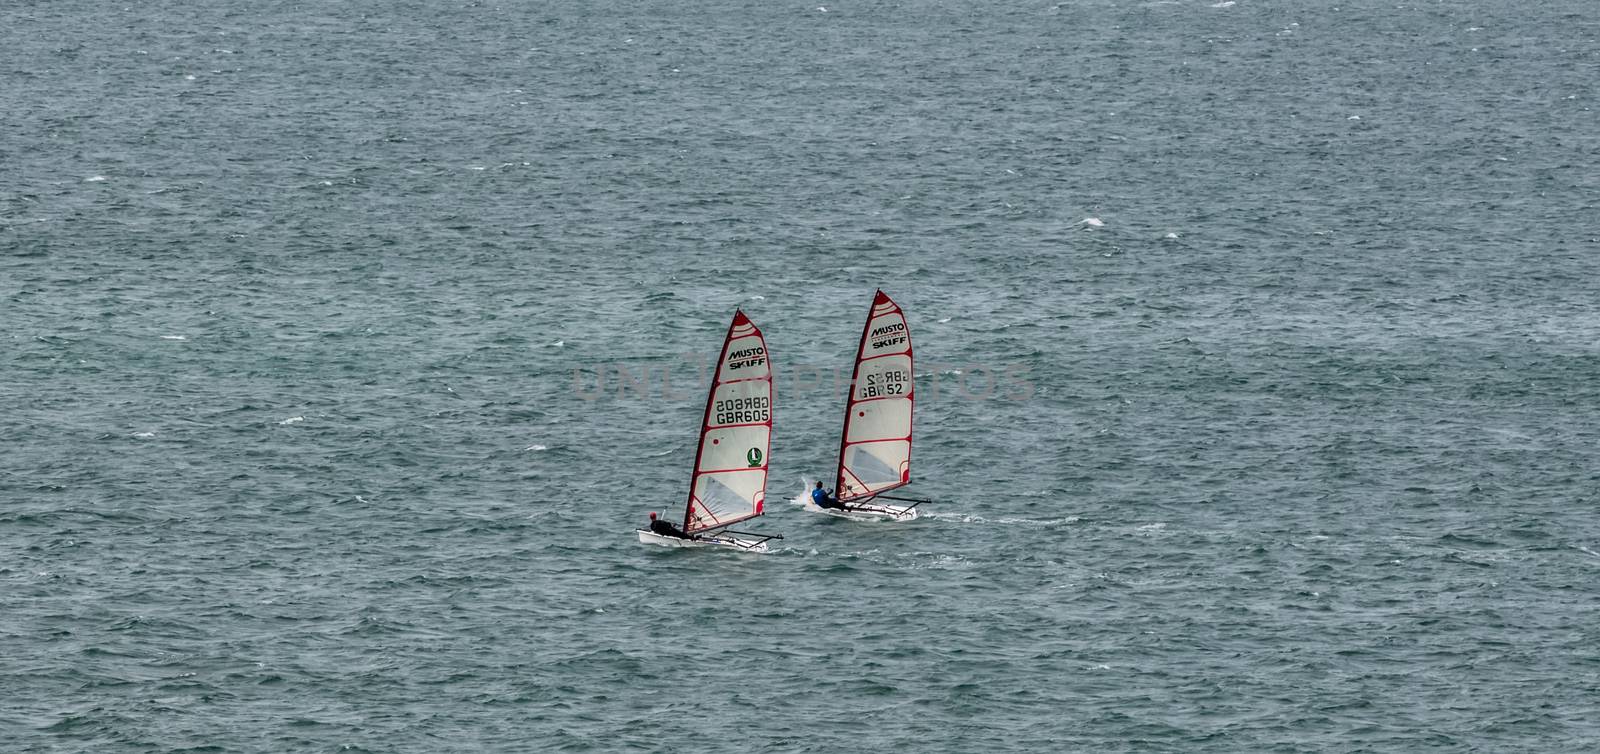 Portland Harbor, UK - July 1, 2020: Two racing Musto Skiff boats sailing in the harbor.